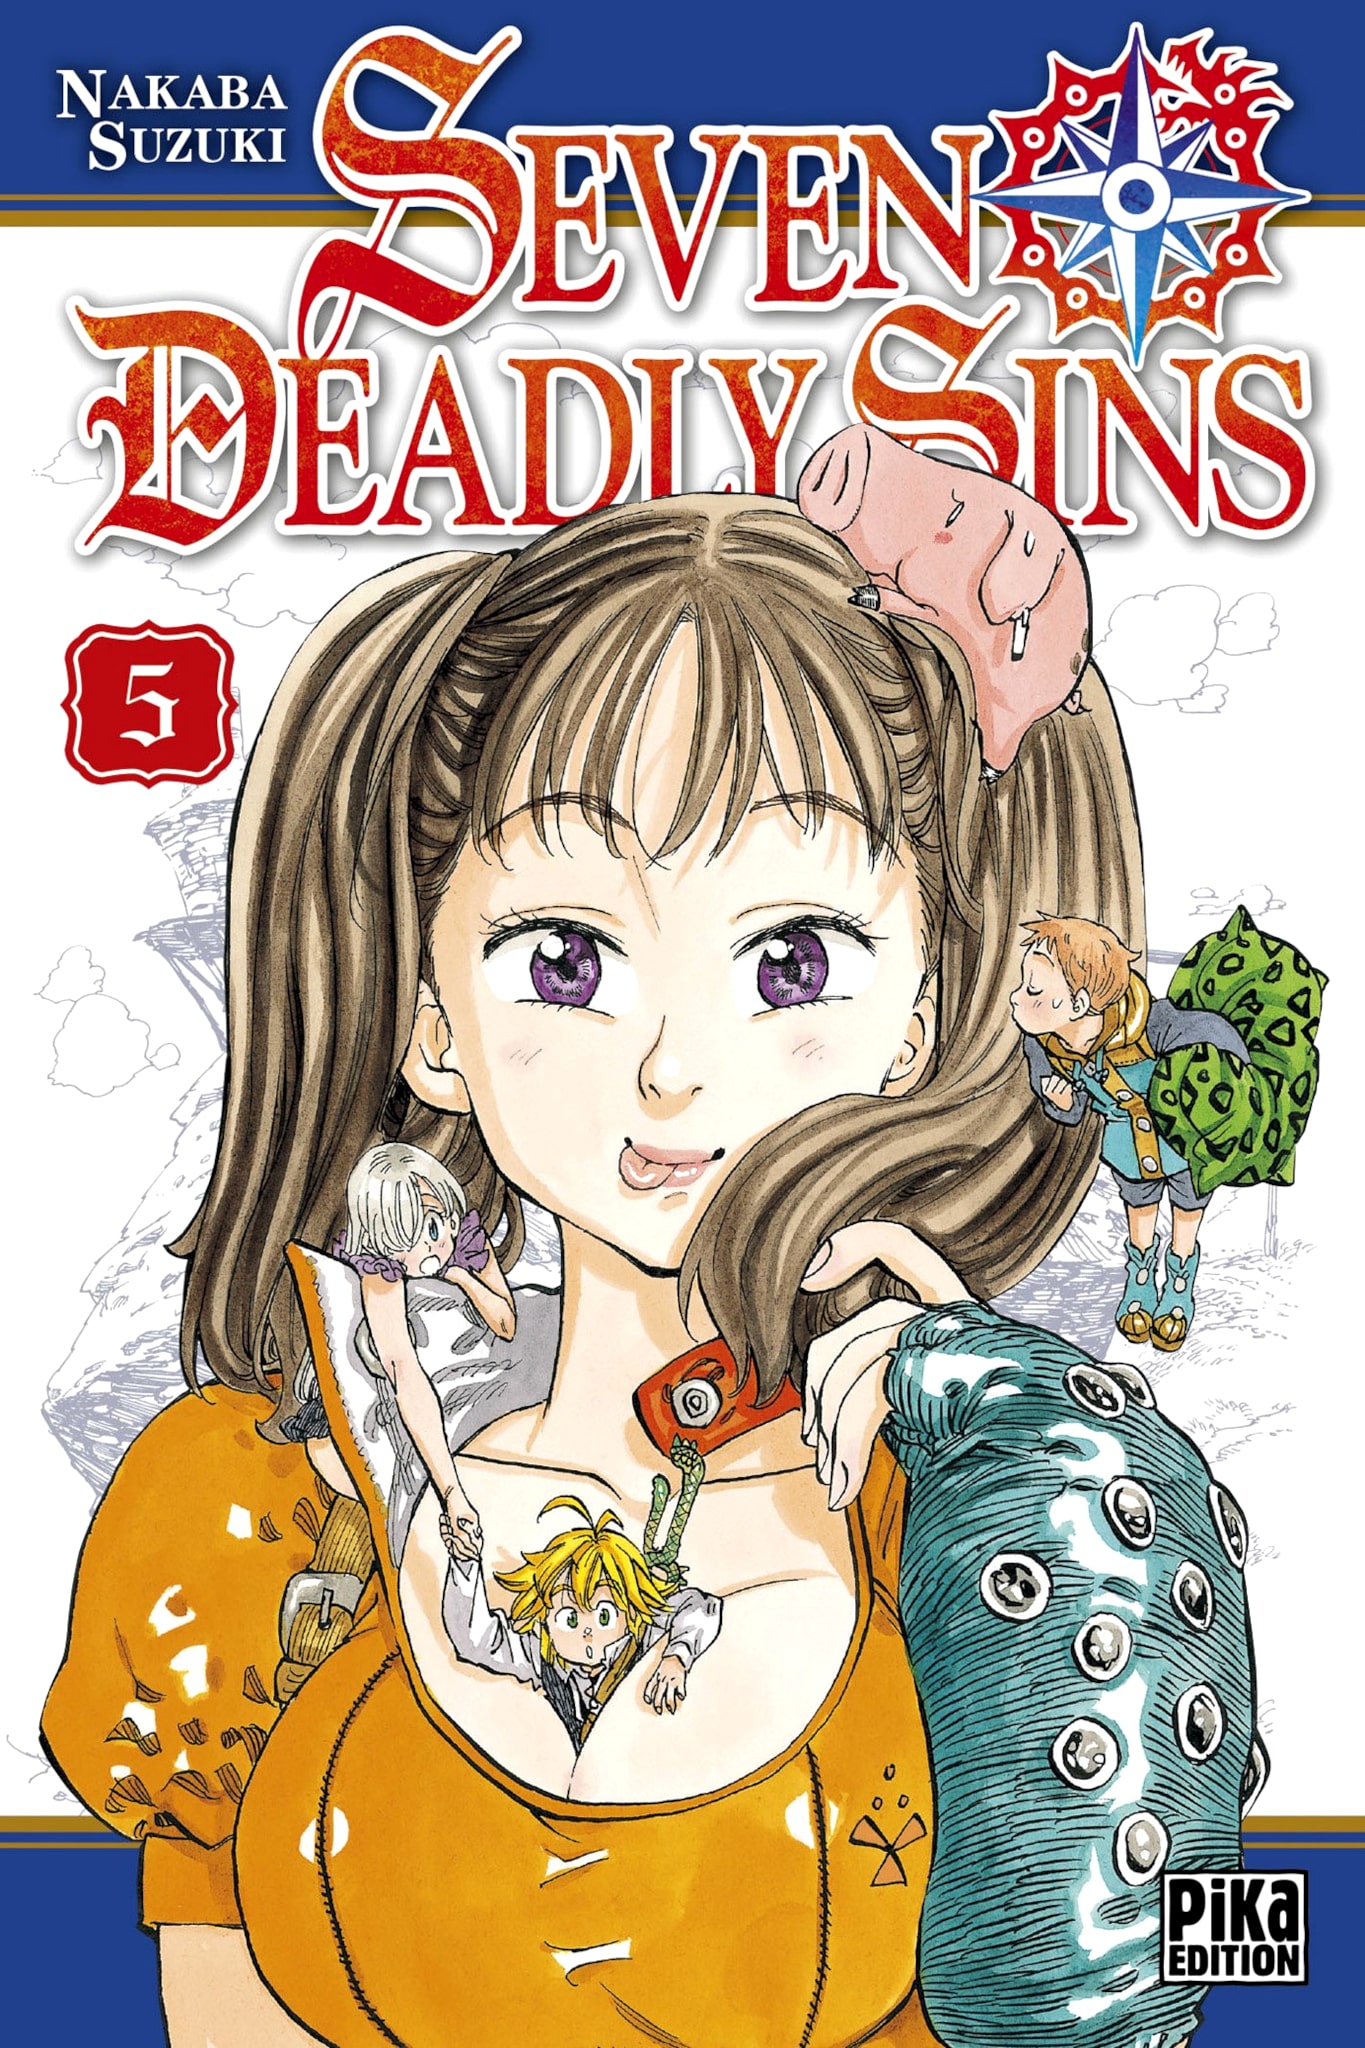 Tome 5 du manga The Seven Deadly Sins